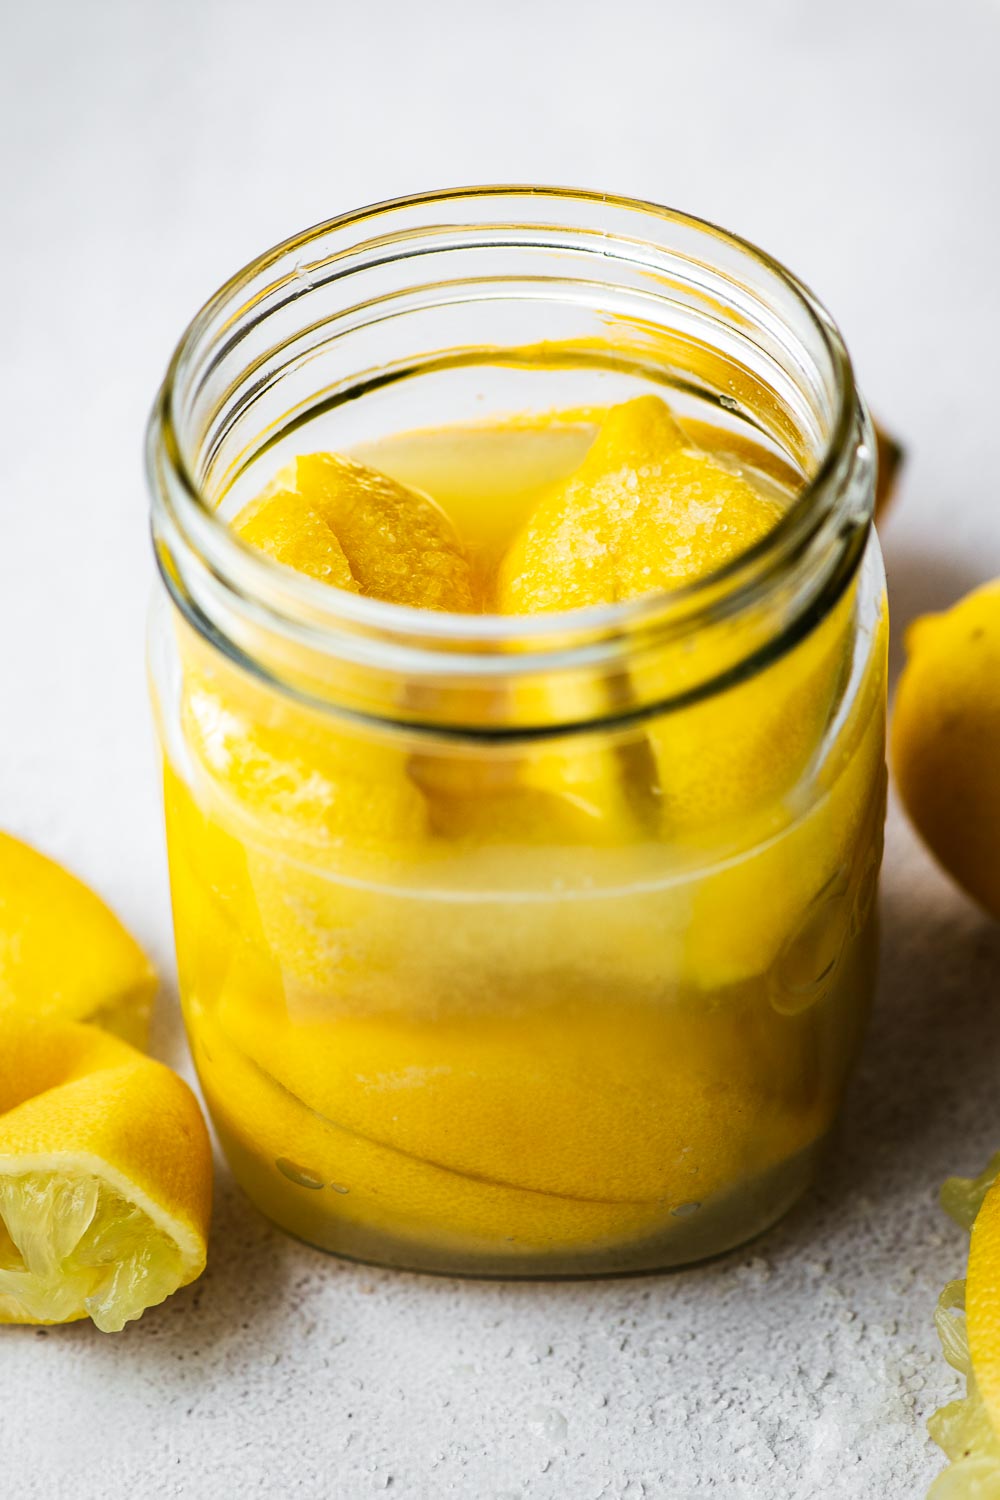 How to make preserved lemons.